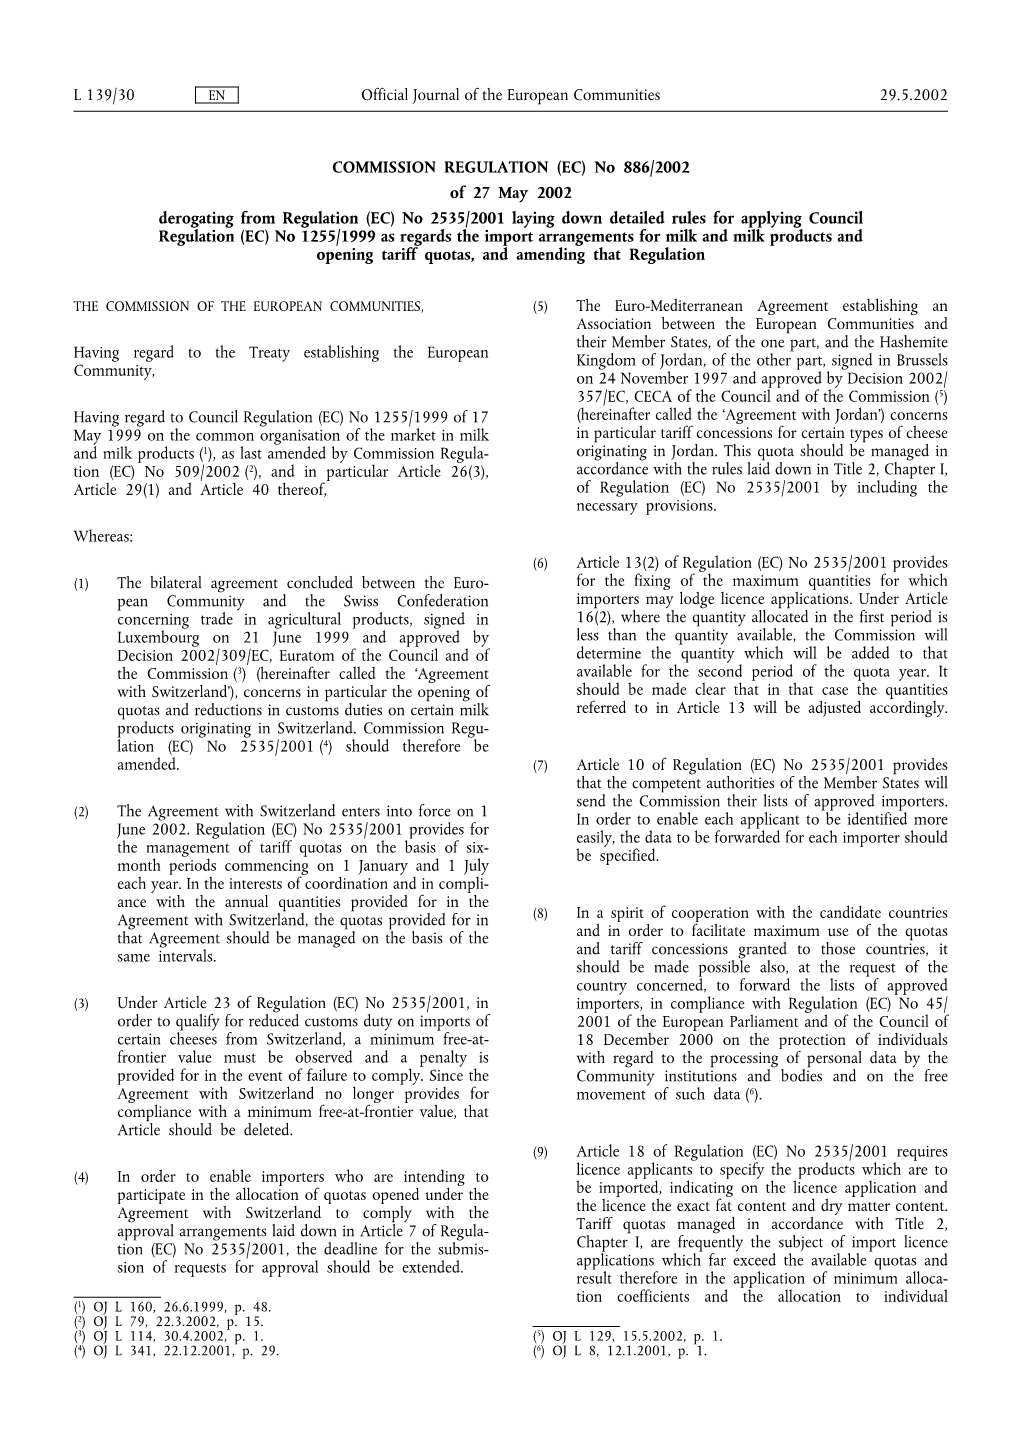 Official Journal of the European Communities 29.5.2002